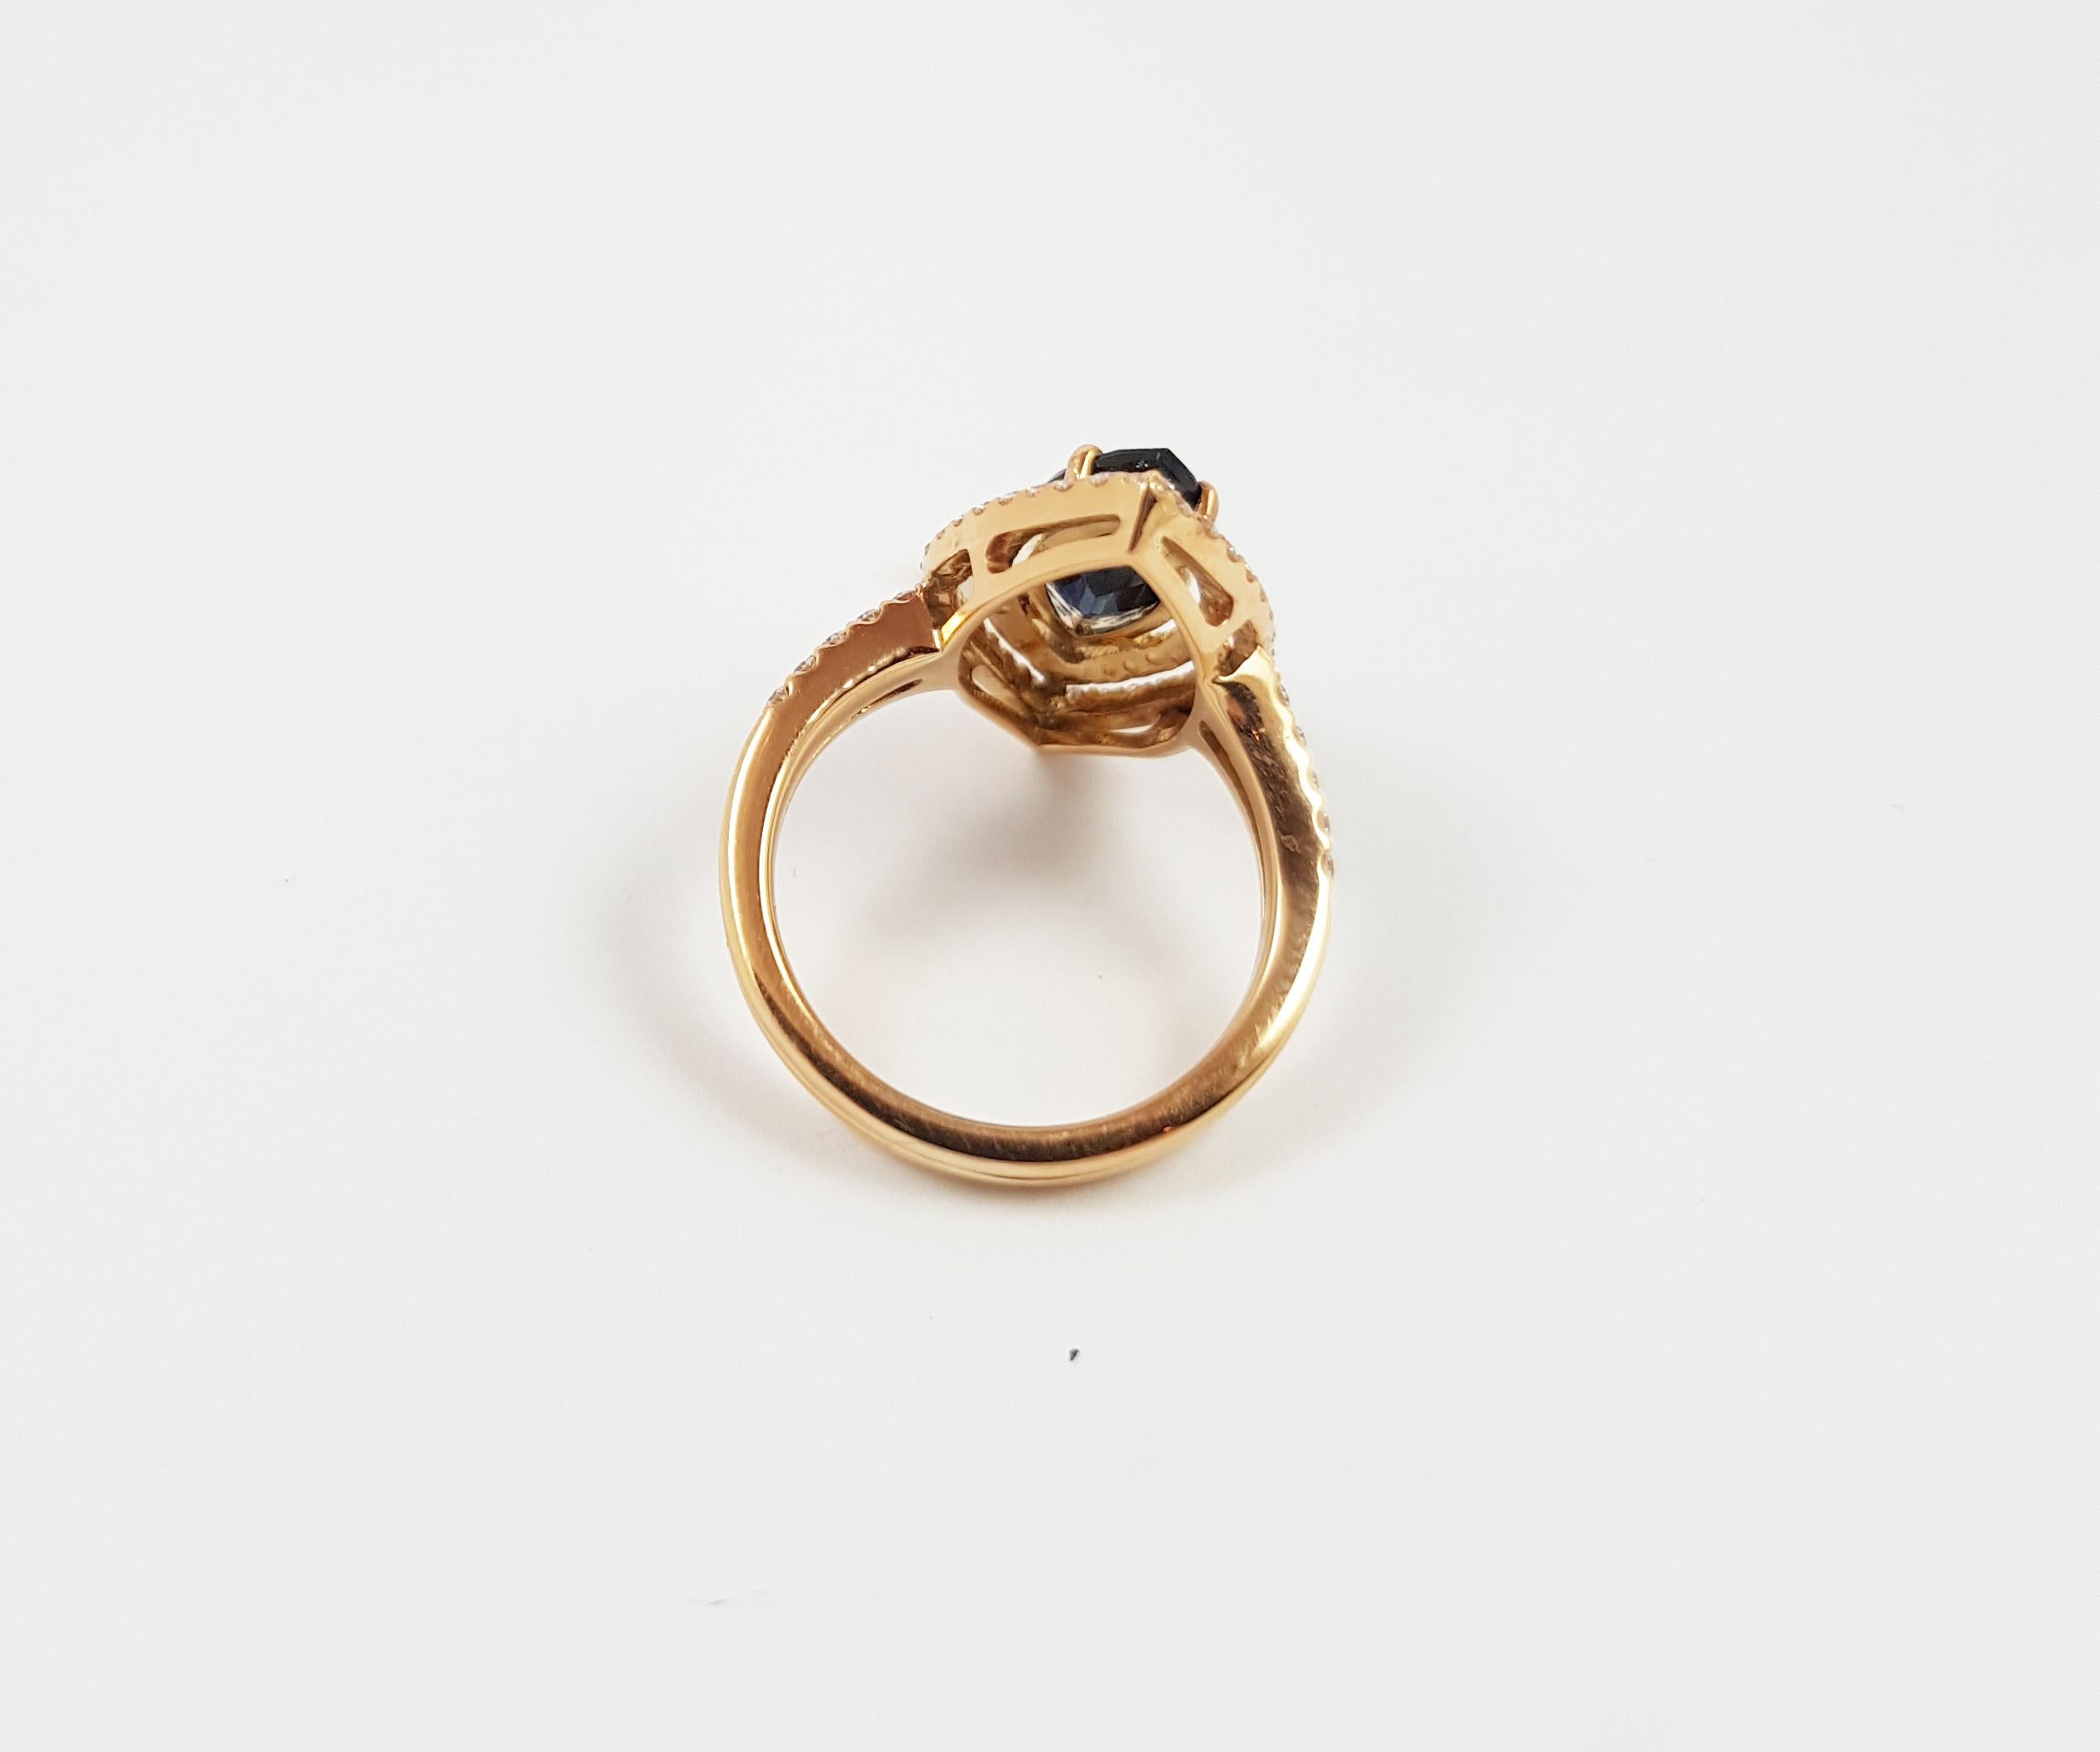 Blue Sapphire 2.77 carats with Diamond 0.63 carat Ring set in 18 Karat Rose Gold Settings

Width: 1.1 cm
Length: 2.1 cm 
Ring Size: 52

